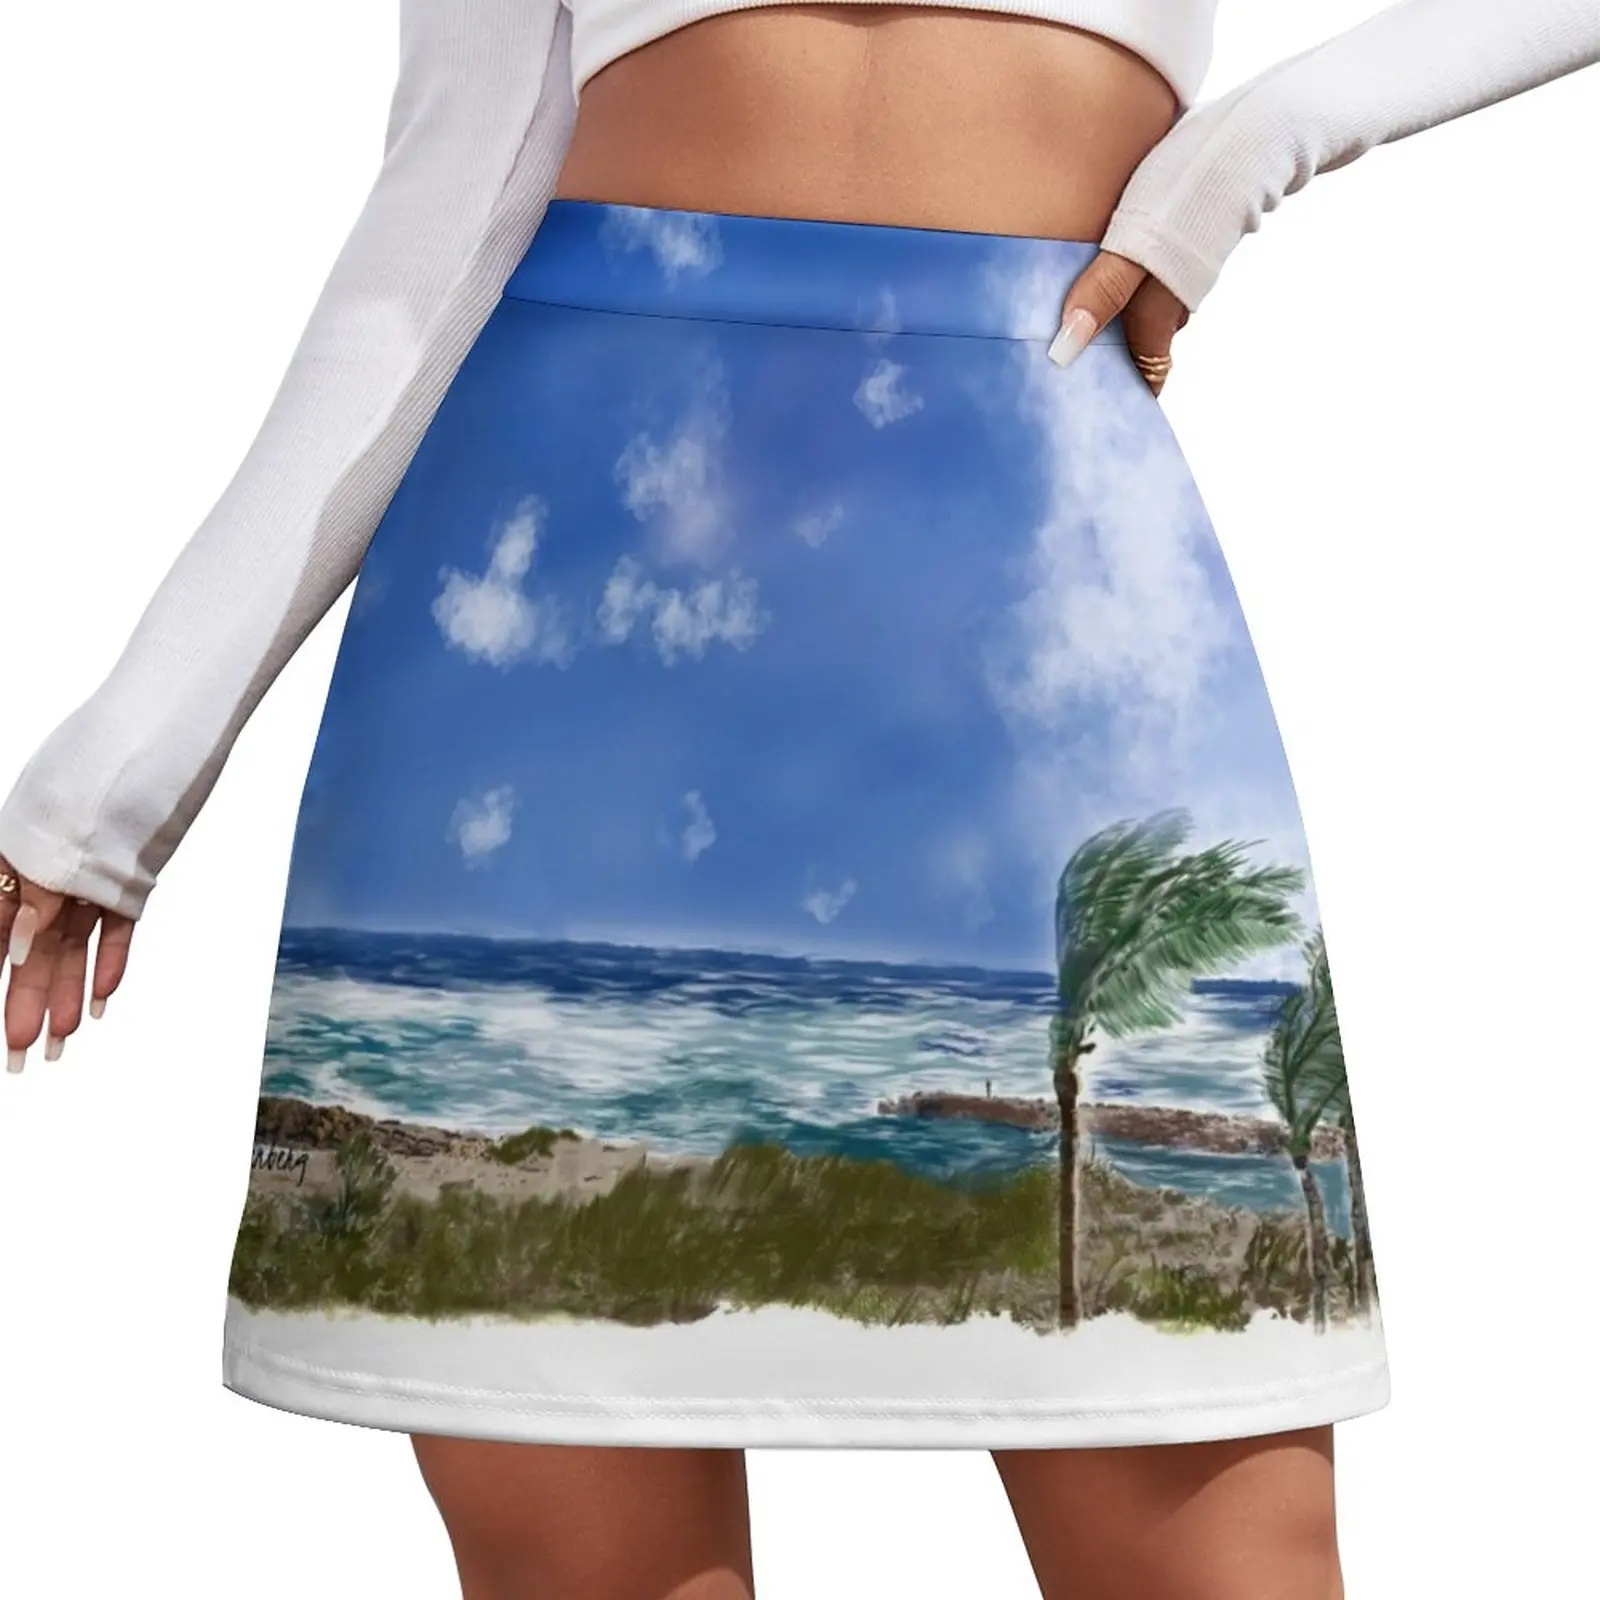 Palm Beach Mini Skirt skirts fashion Female dress short skirts for women travel palm beach книга